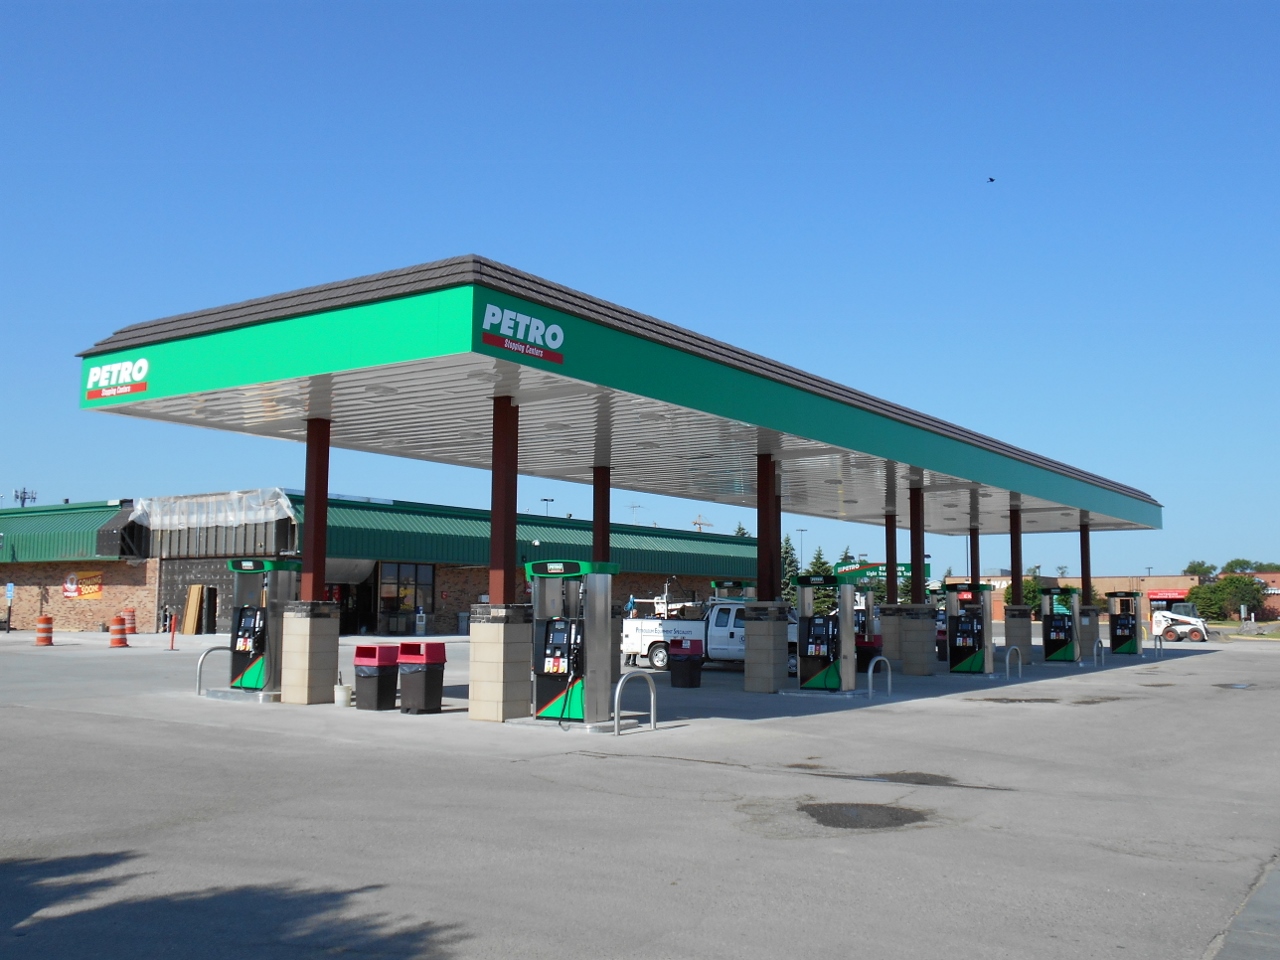 Petro canopy, Fargo, ND